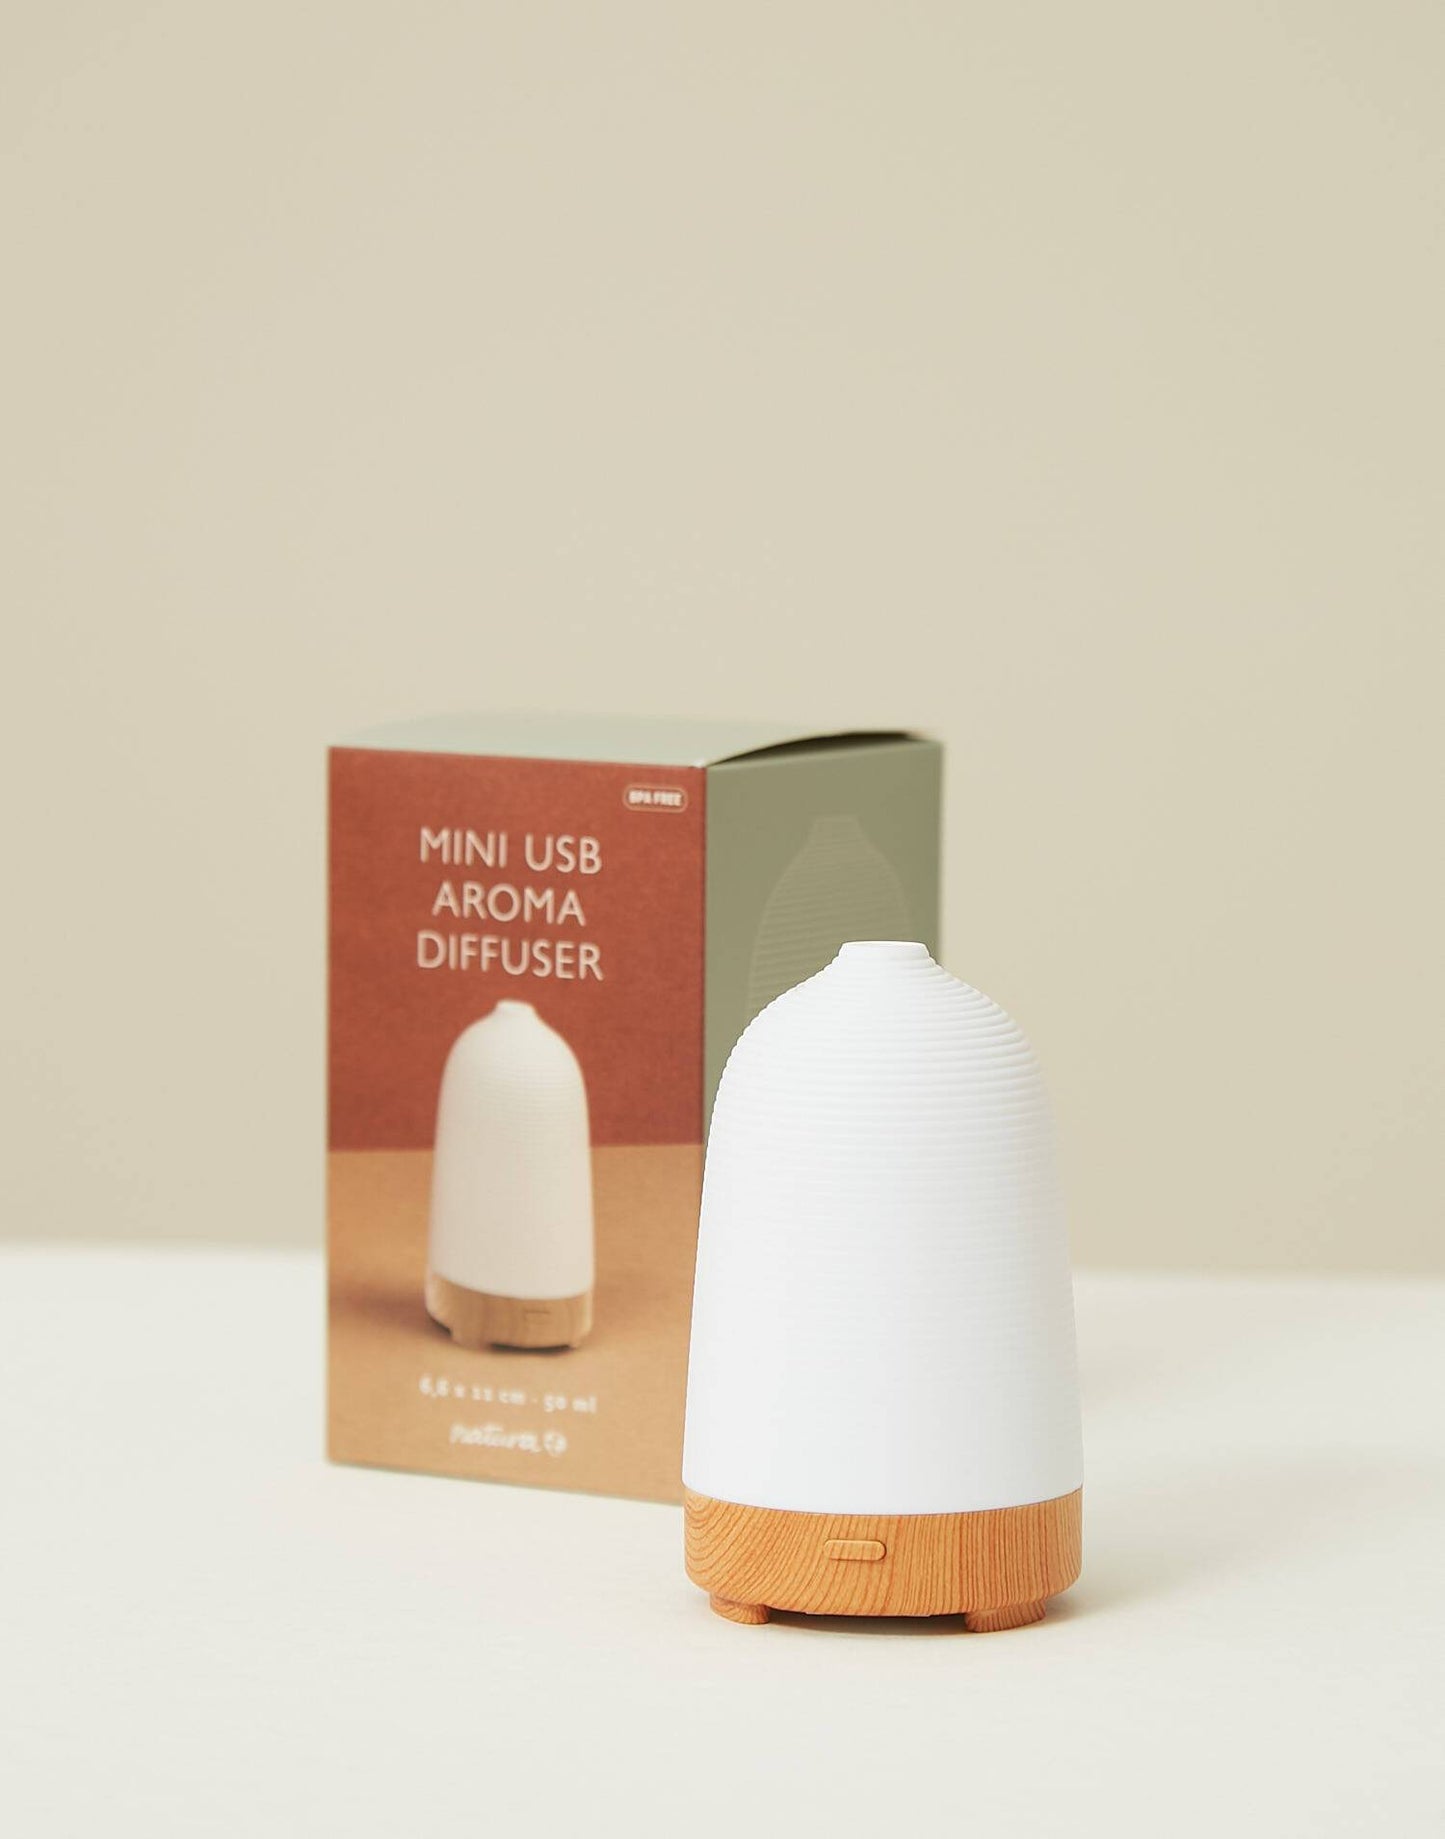 Usb aromatherapy diffuser